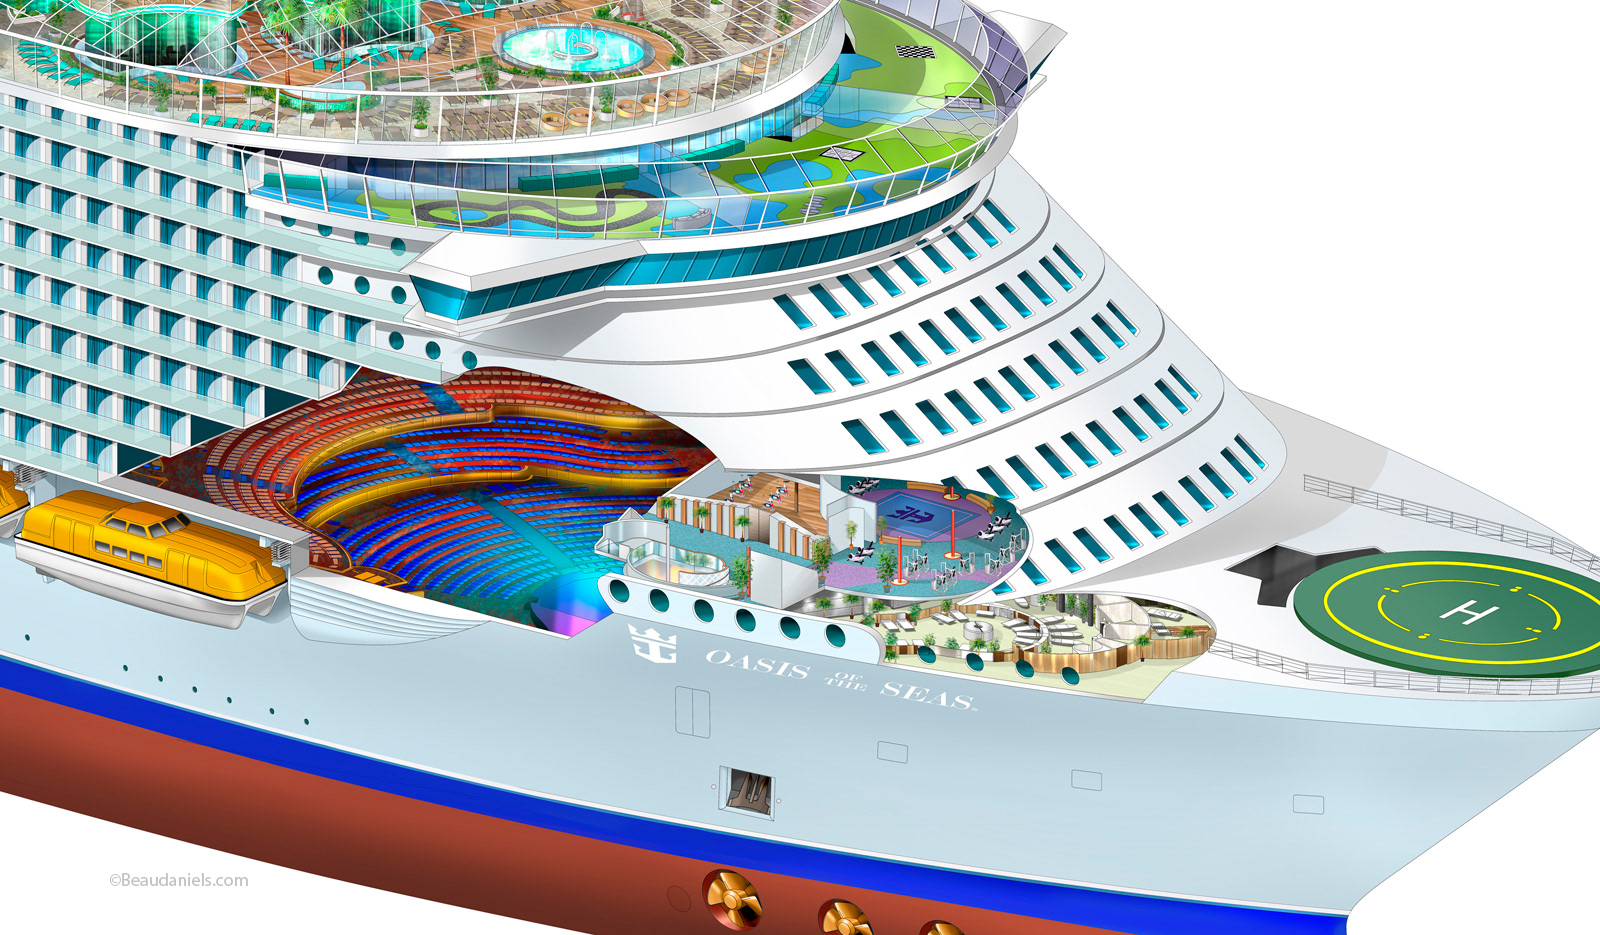 Technical illustration, Beau and Alan Daniels. Royal Caribbean Cruise